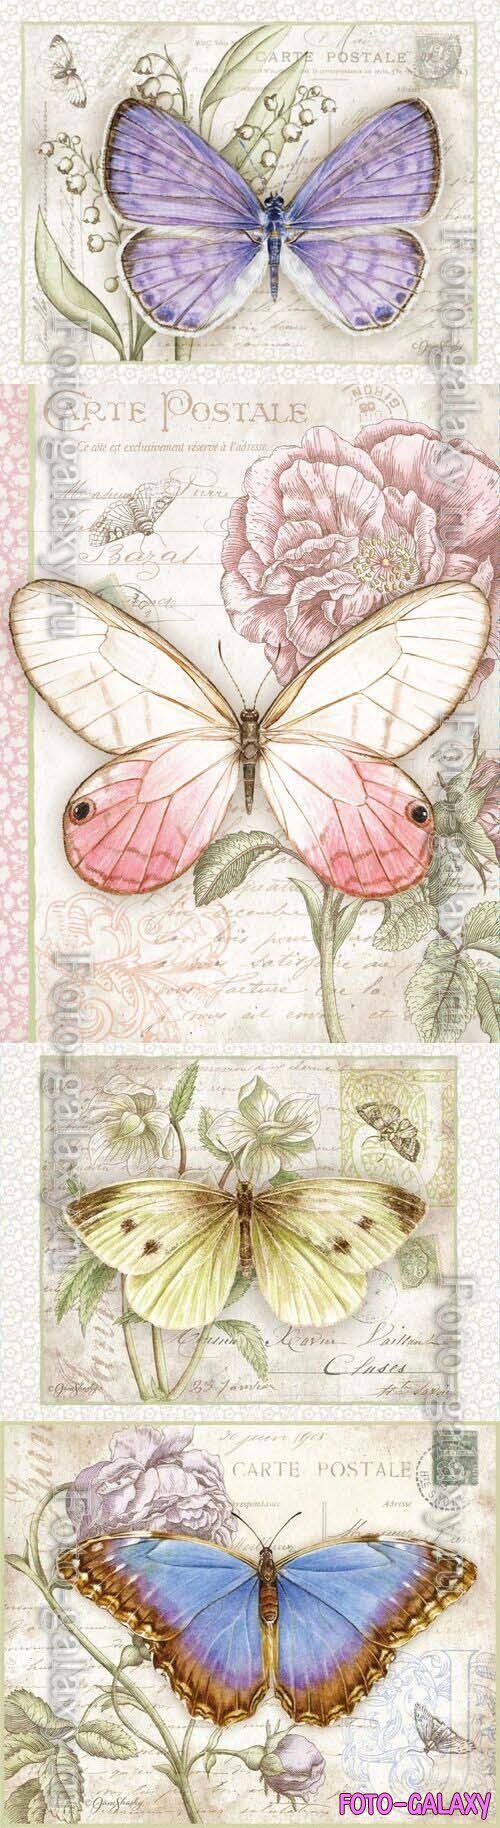 Beautiful butterflies on vintage backgrounds